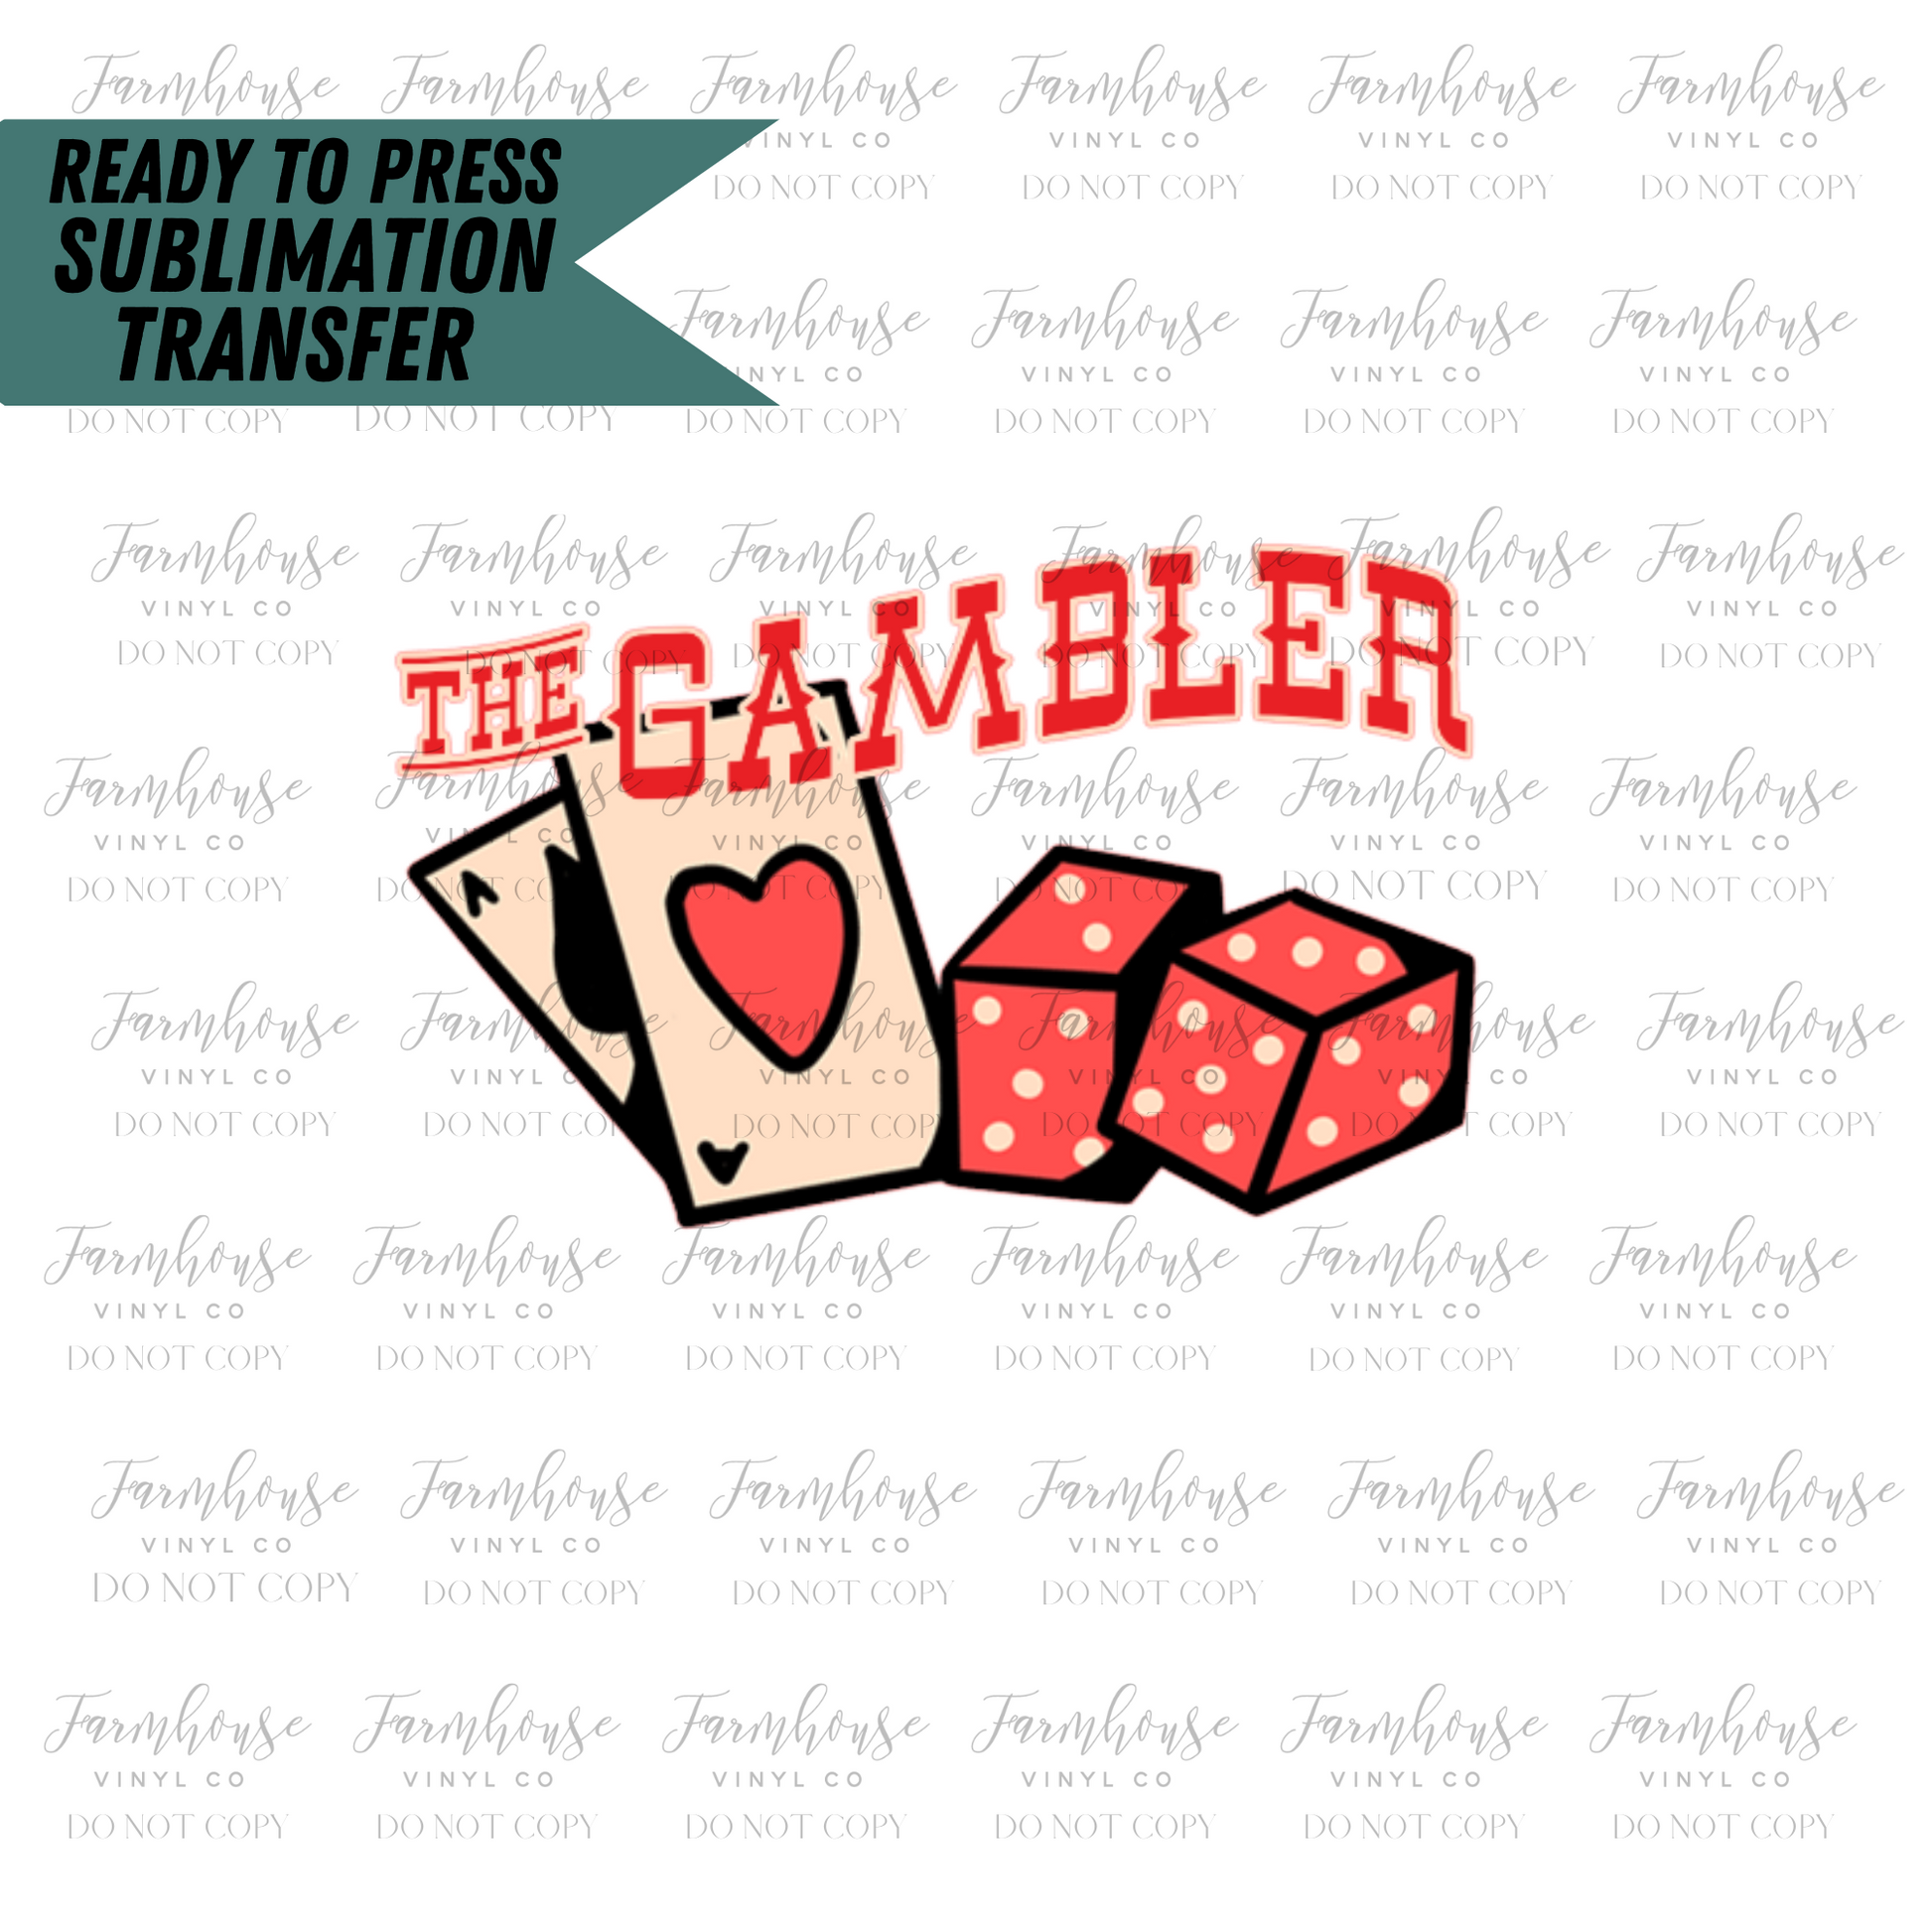 The Gambler Ready to Press Sublimation Transfer - Farmhouse Vinyl Co